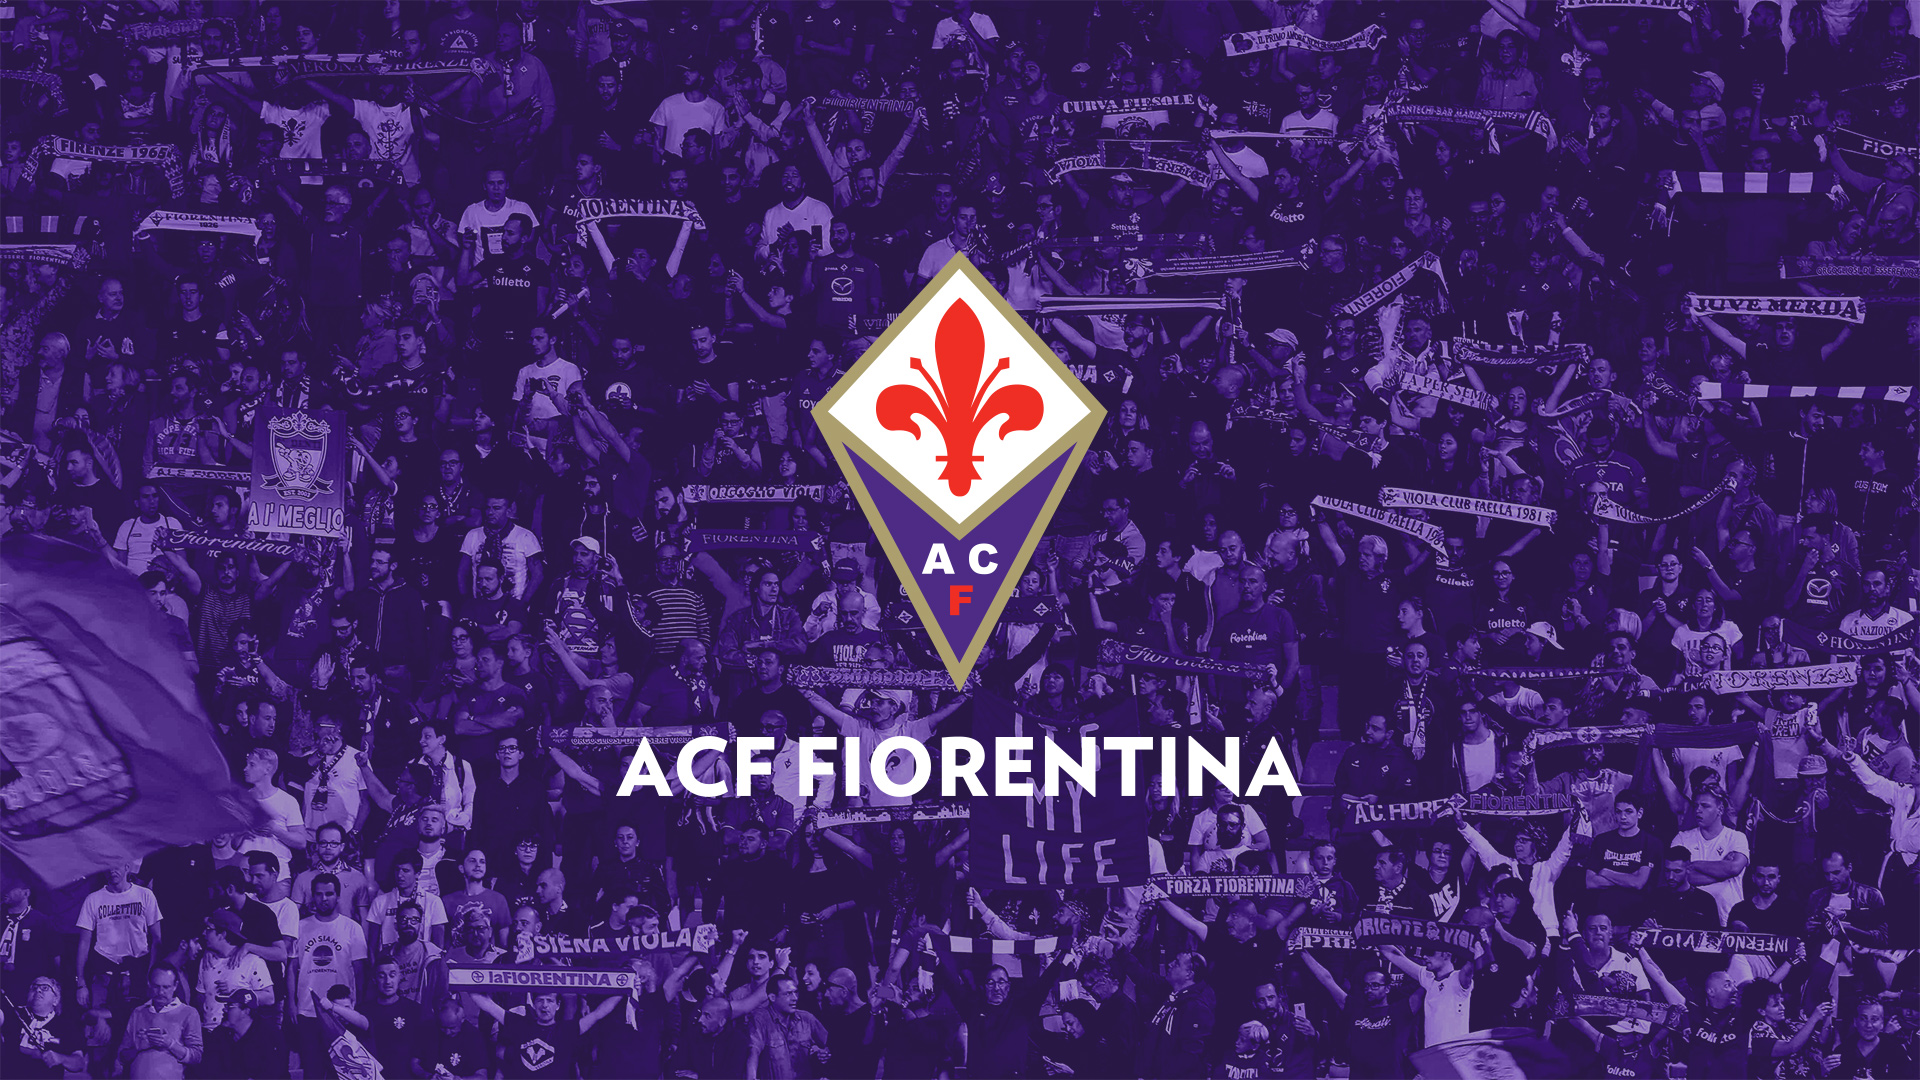 Acf Fiorentina Matteo Beretta